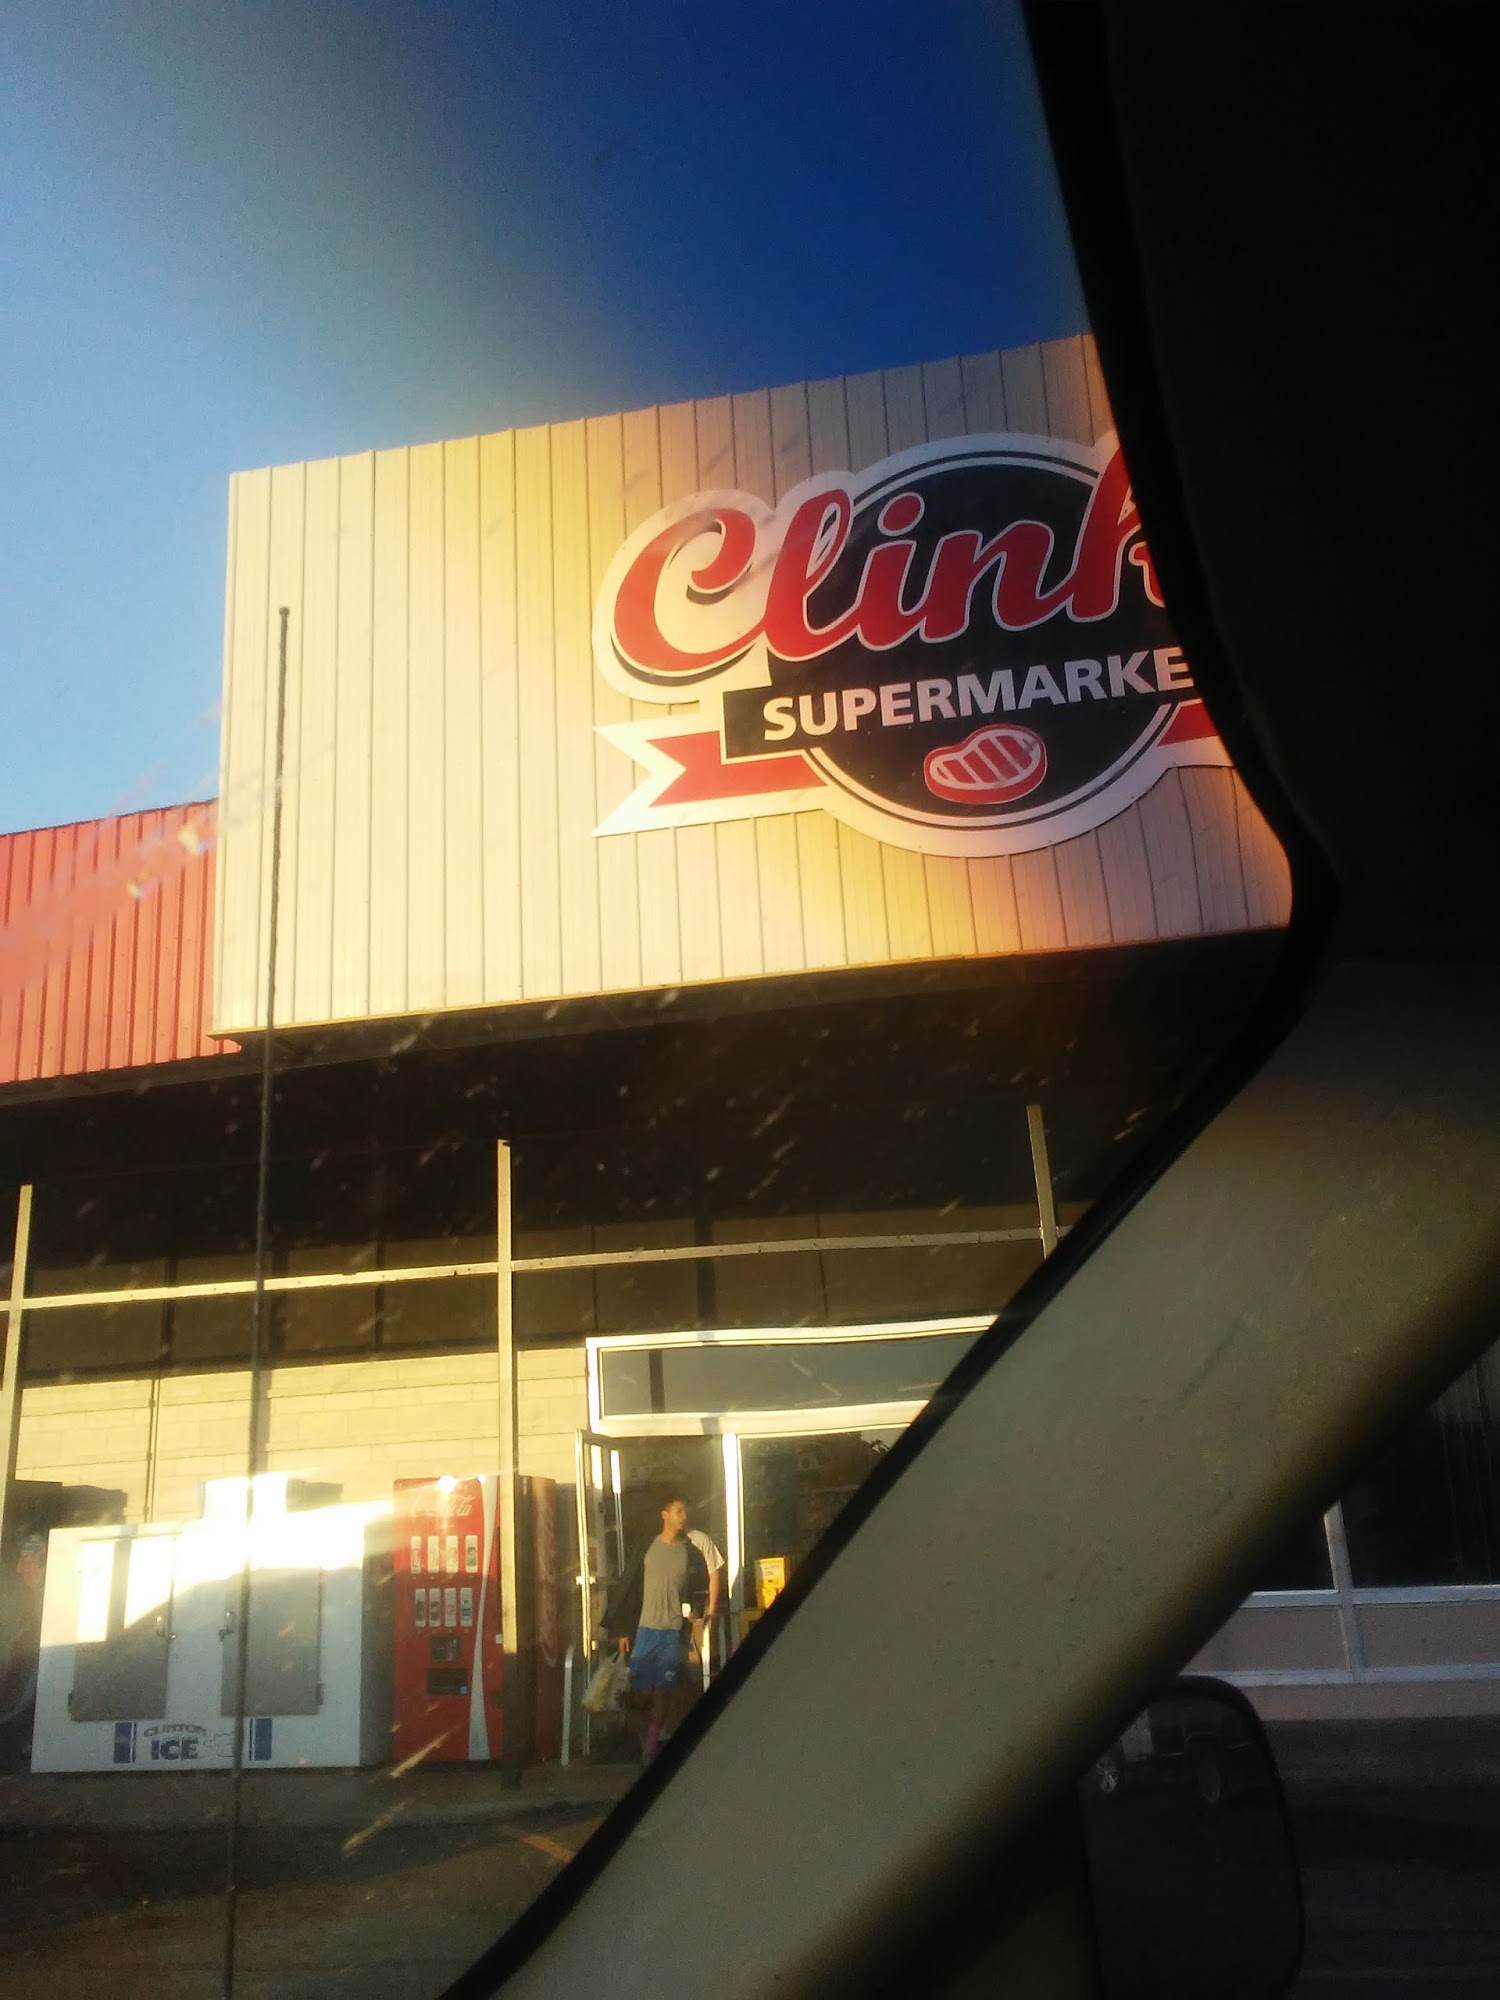 Clink's Supermarket